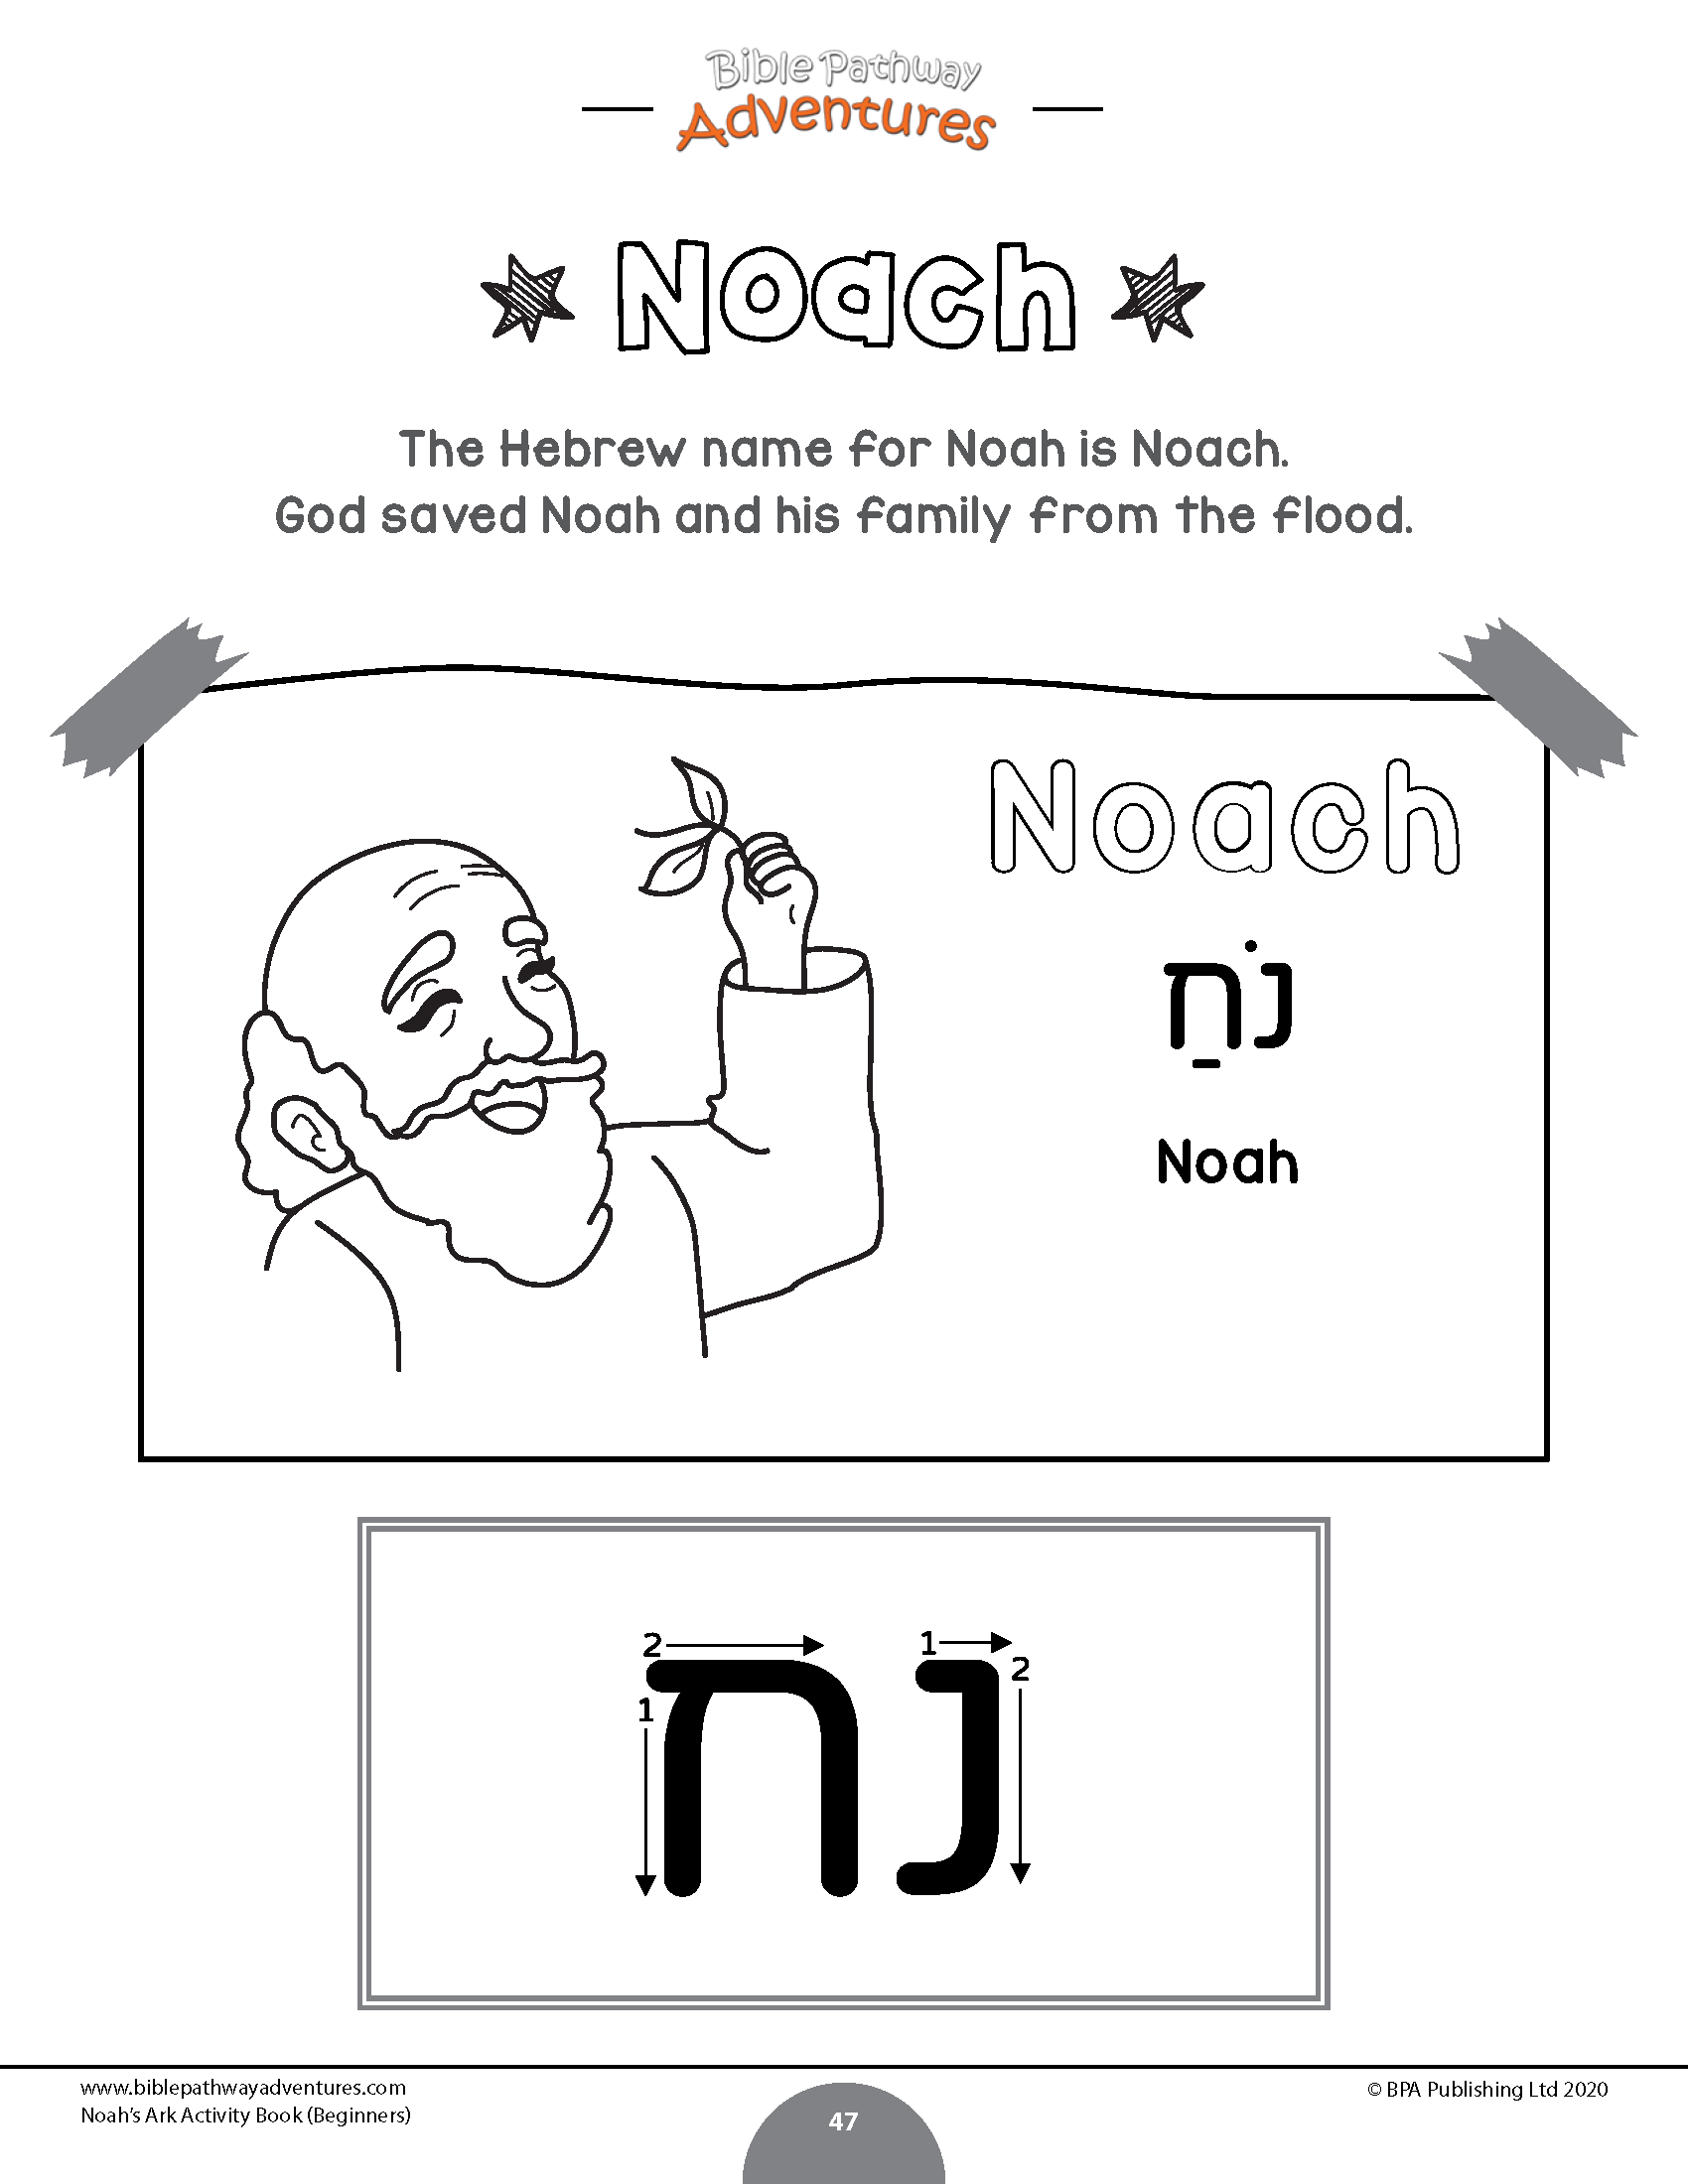 Noahs ark activity book for beginners pdf â bible pathway adventures